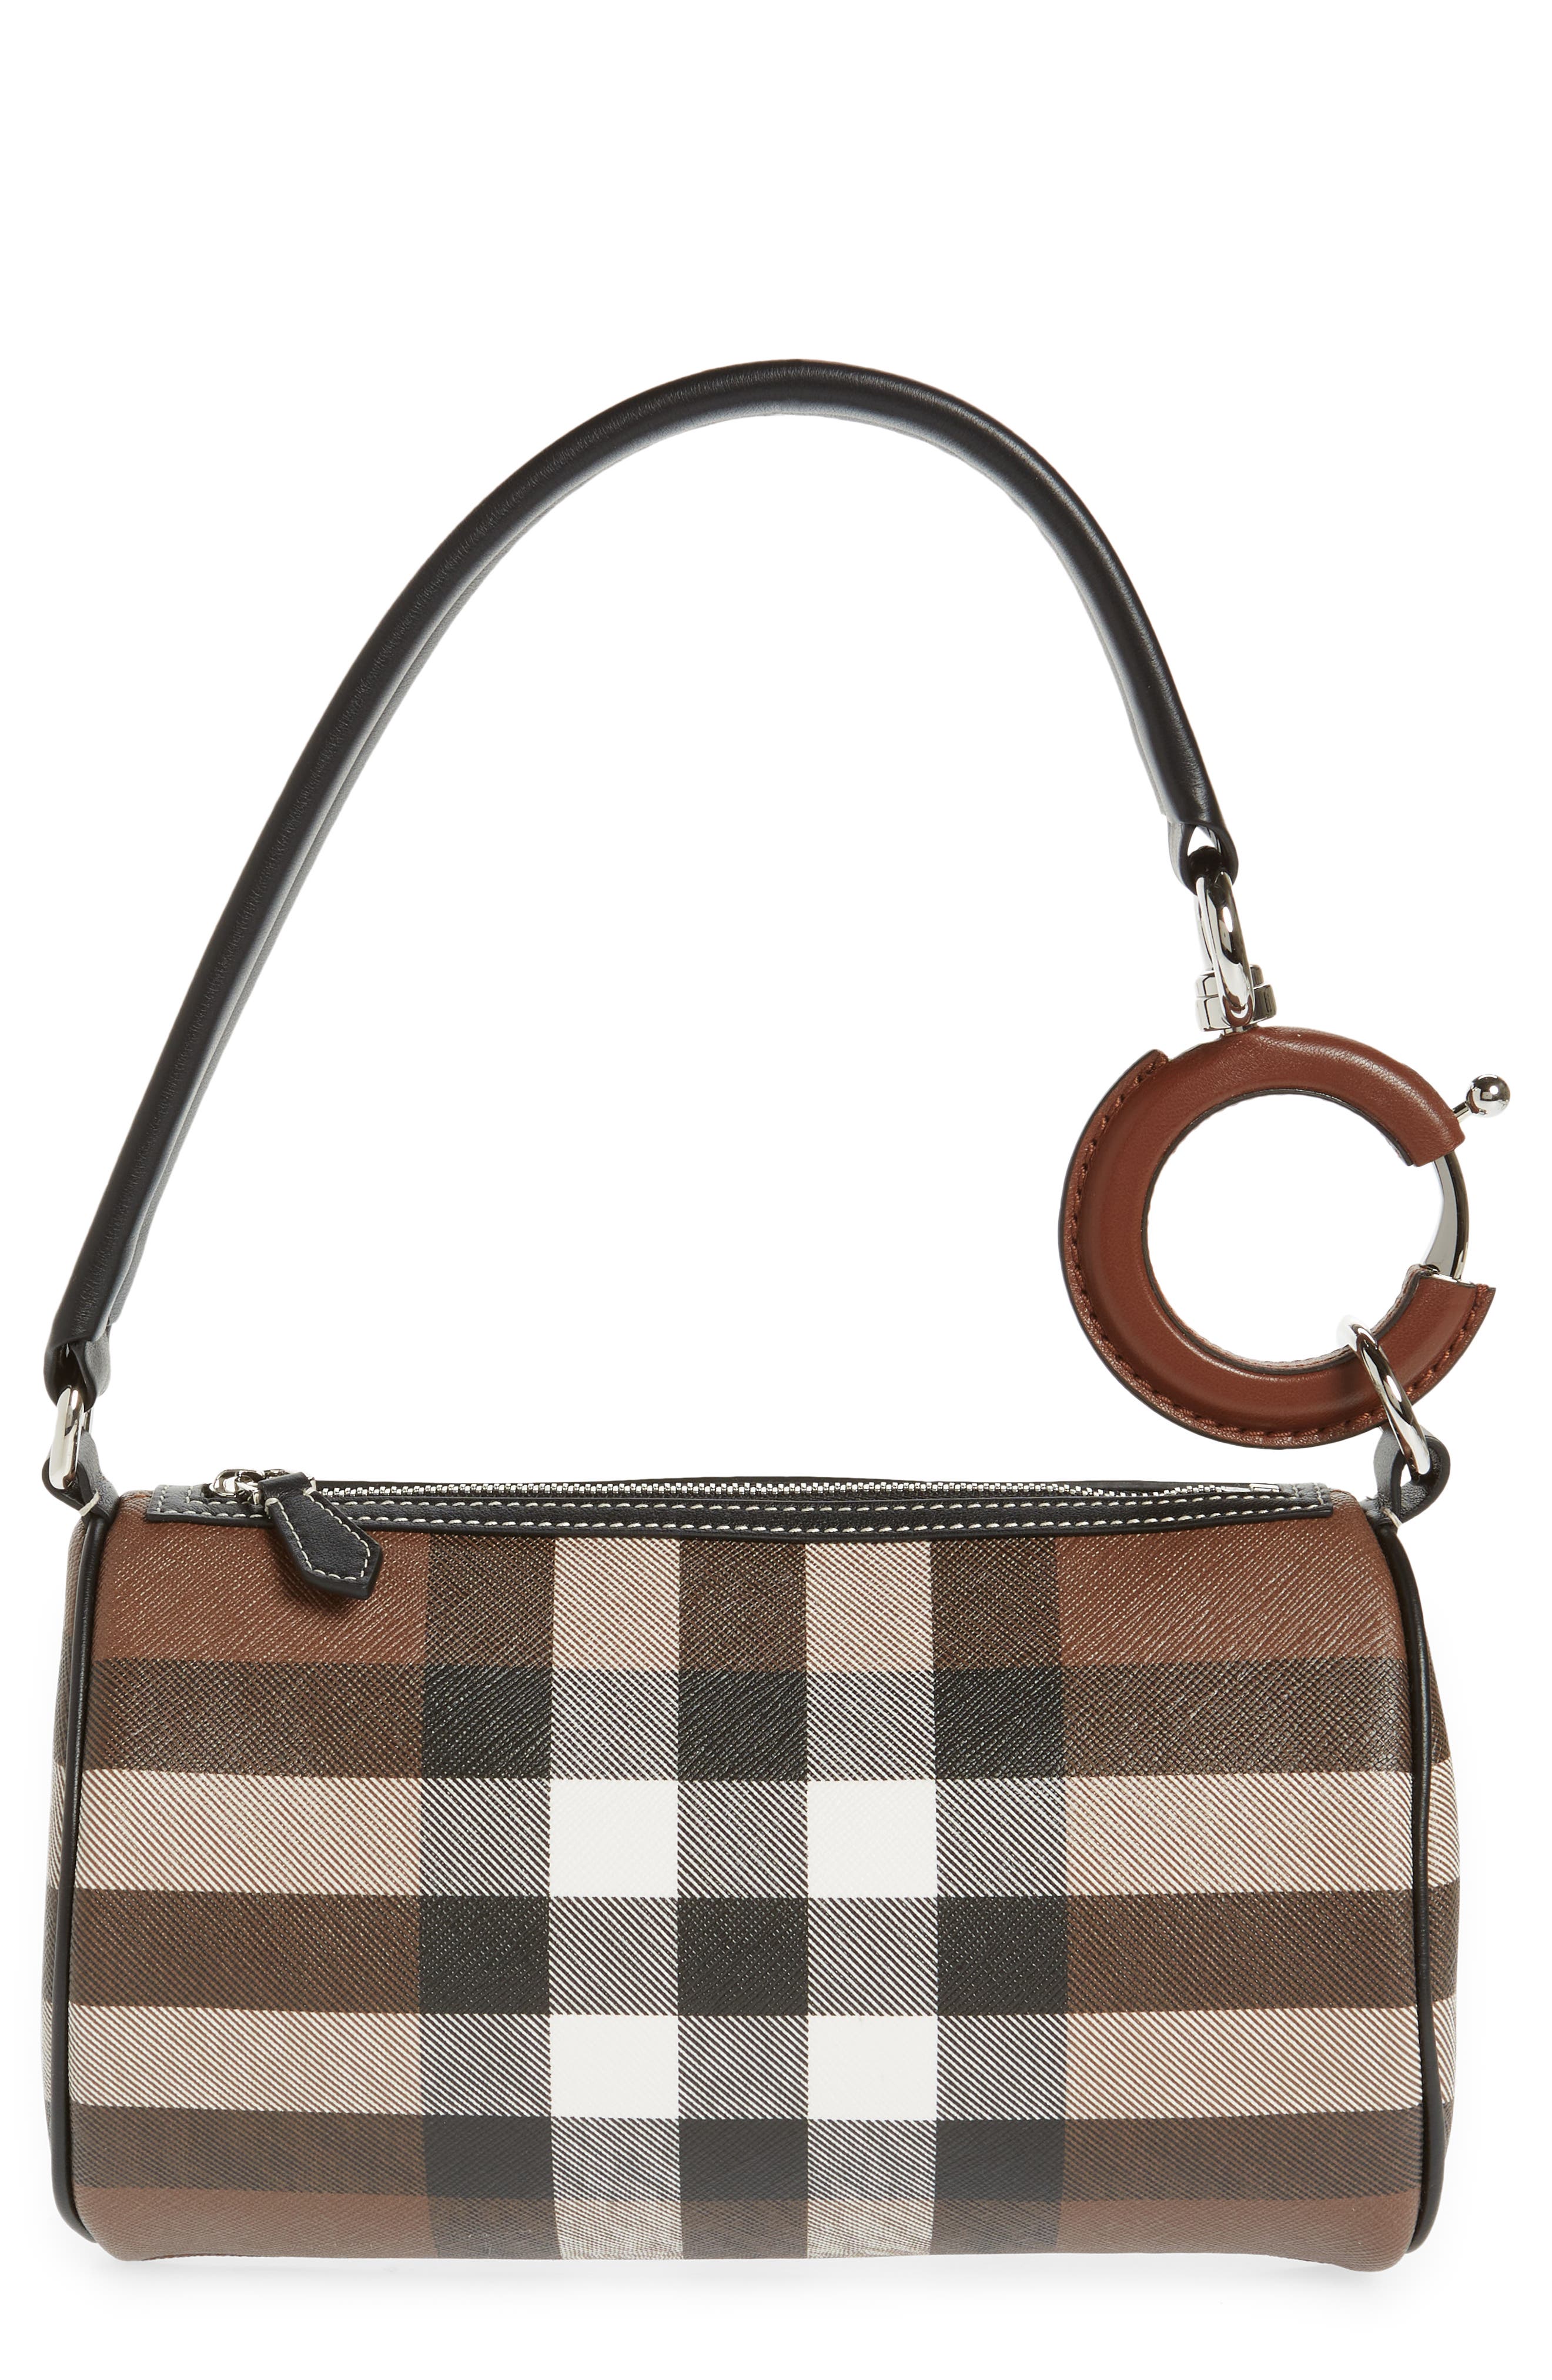 BURBERRY Mini Rhombi Check Canvas Handbag in Dark Birch Brown